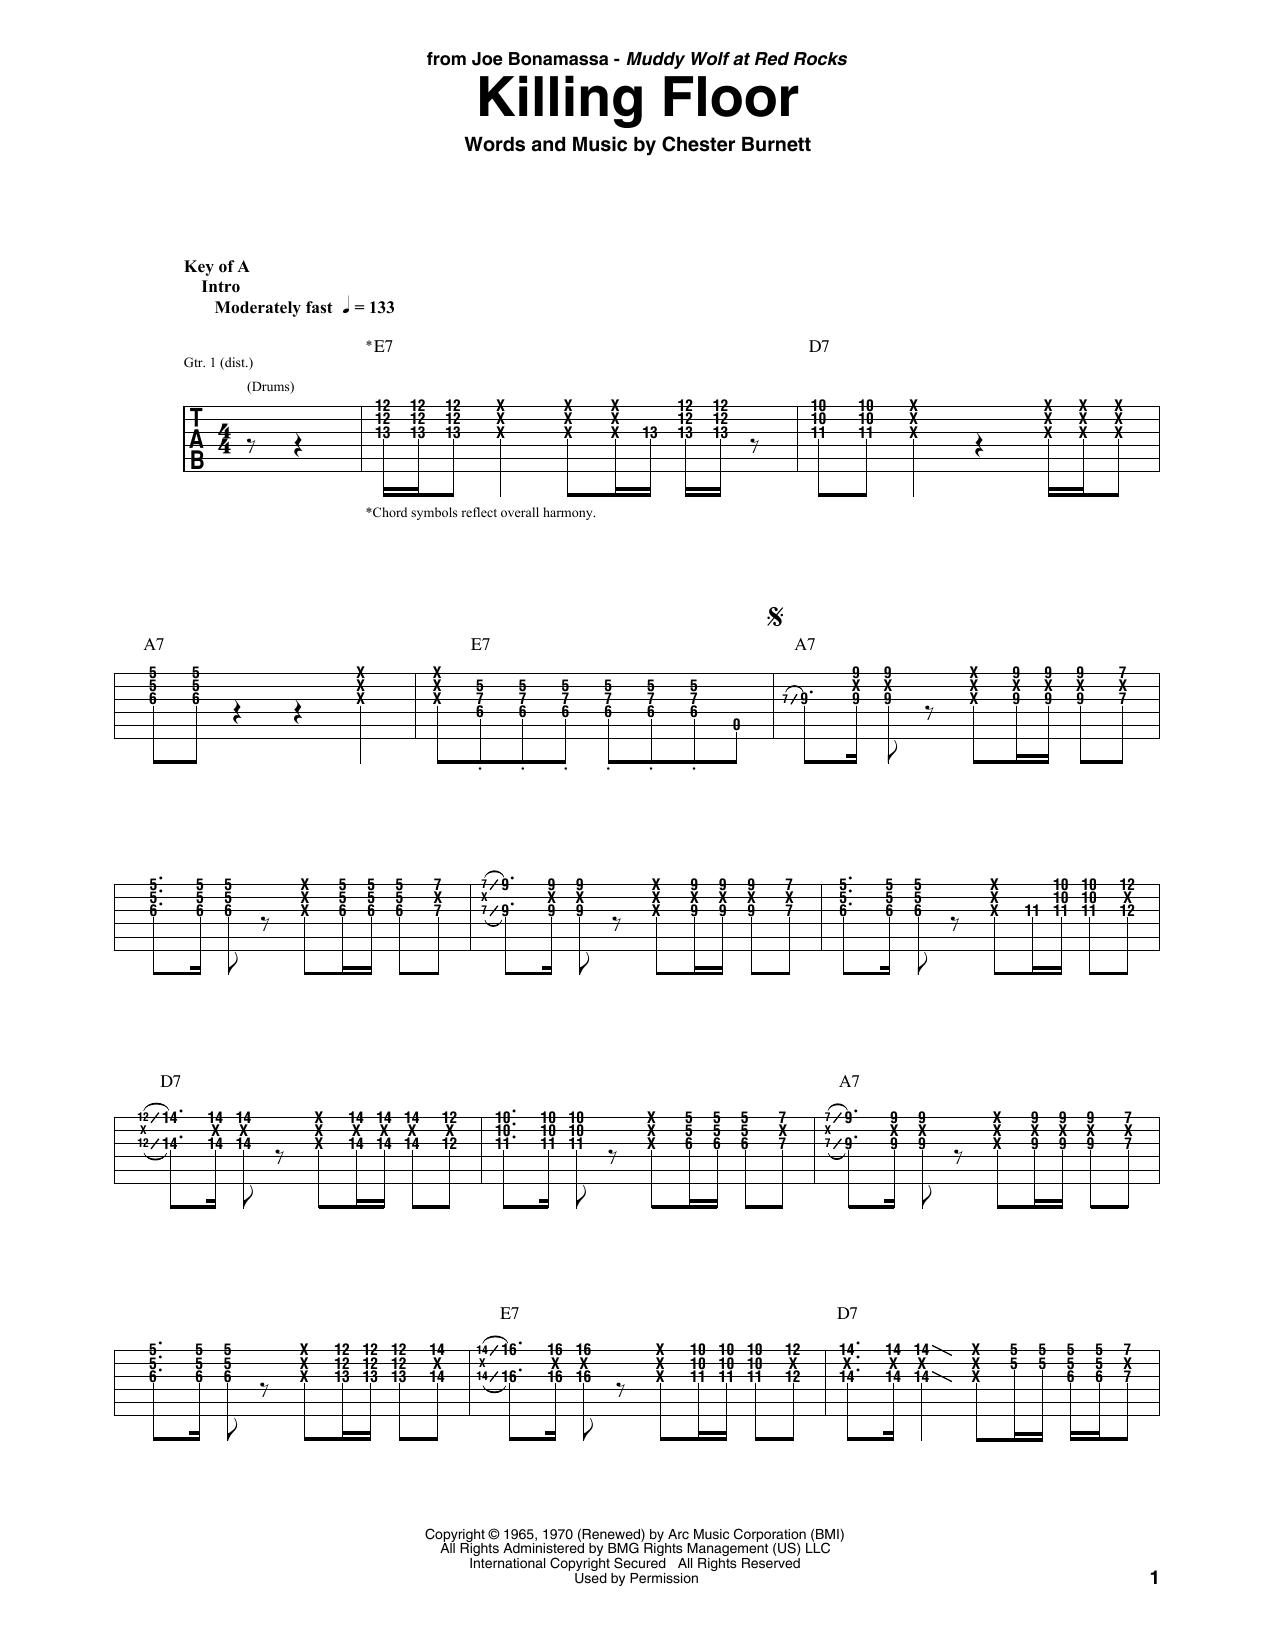 Download Joe Bonamassa Killing Floor Sheet Music and learn how to play Guitar Tab PDF digital score in minutes